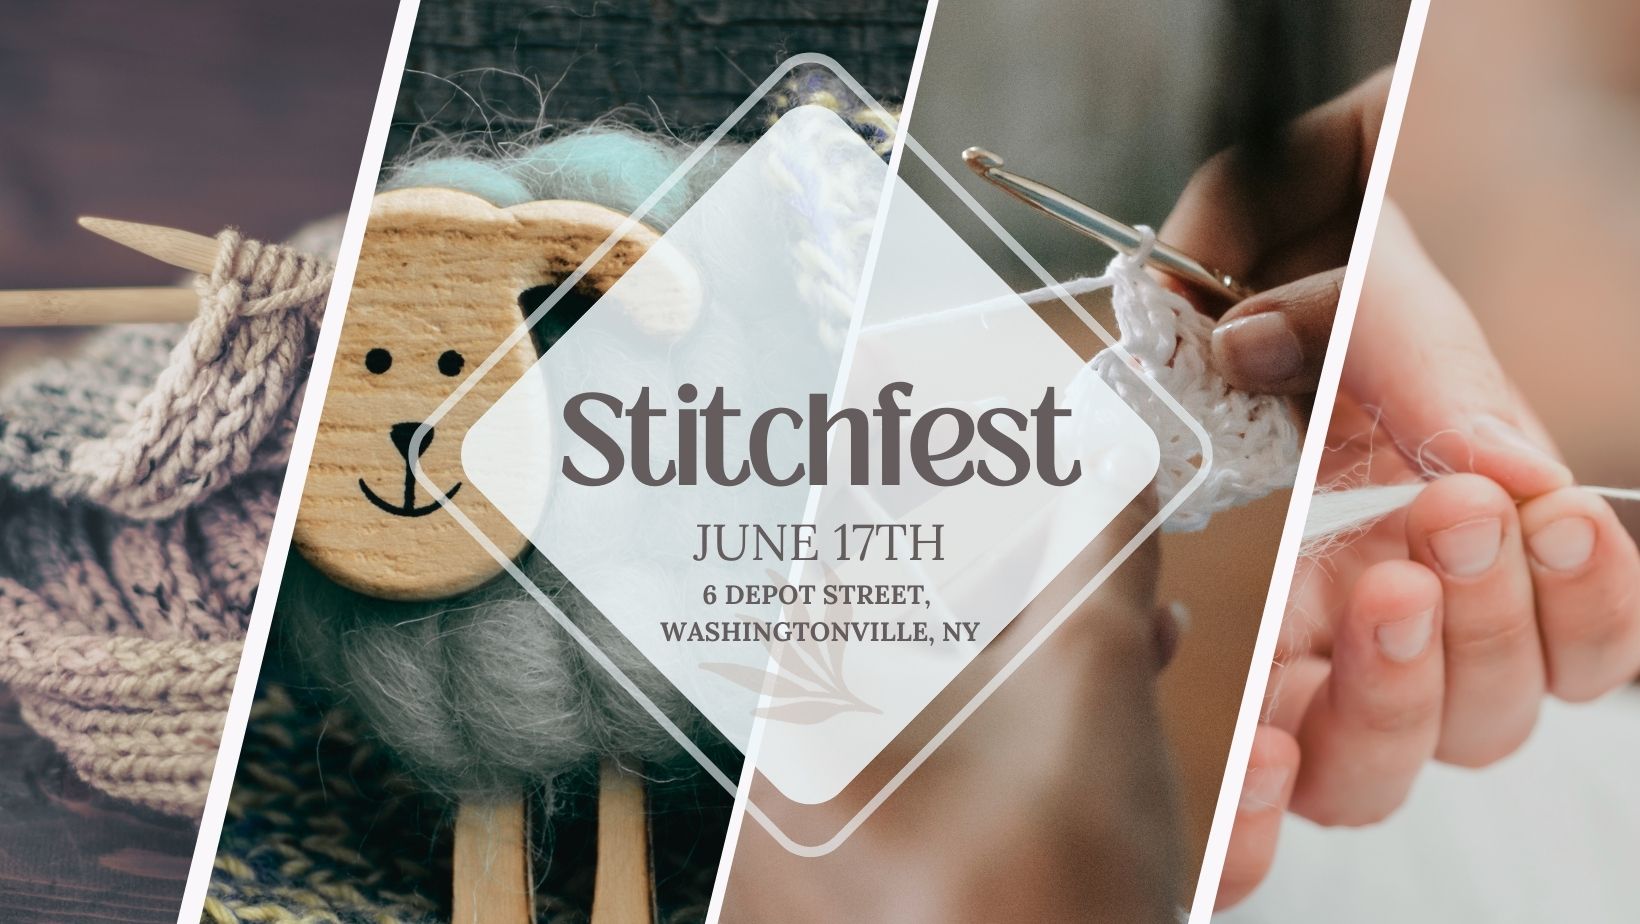 Stitchfest
June 17th 2023